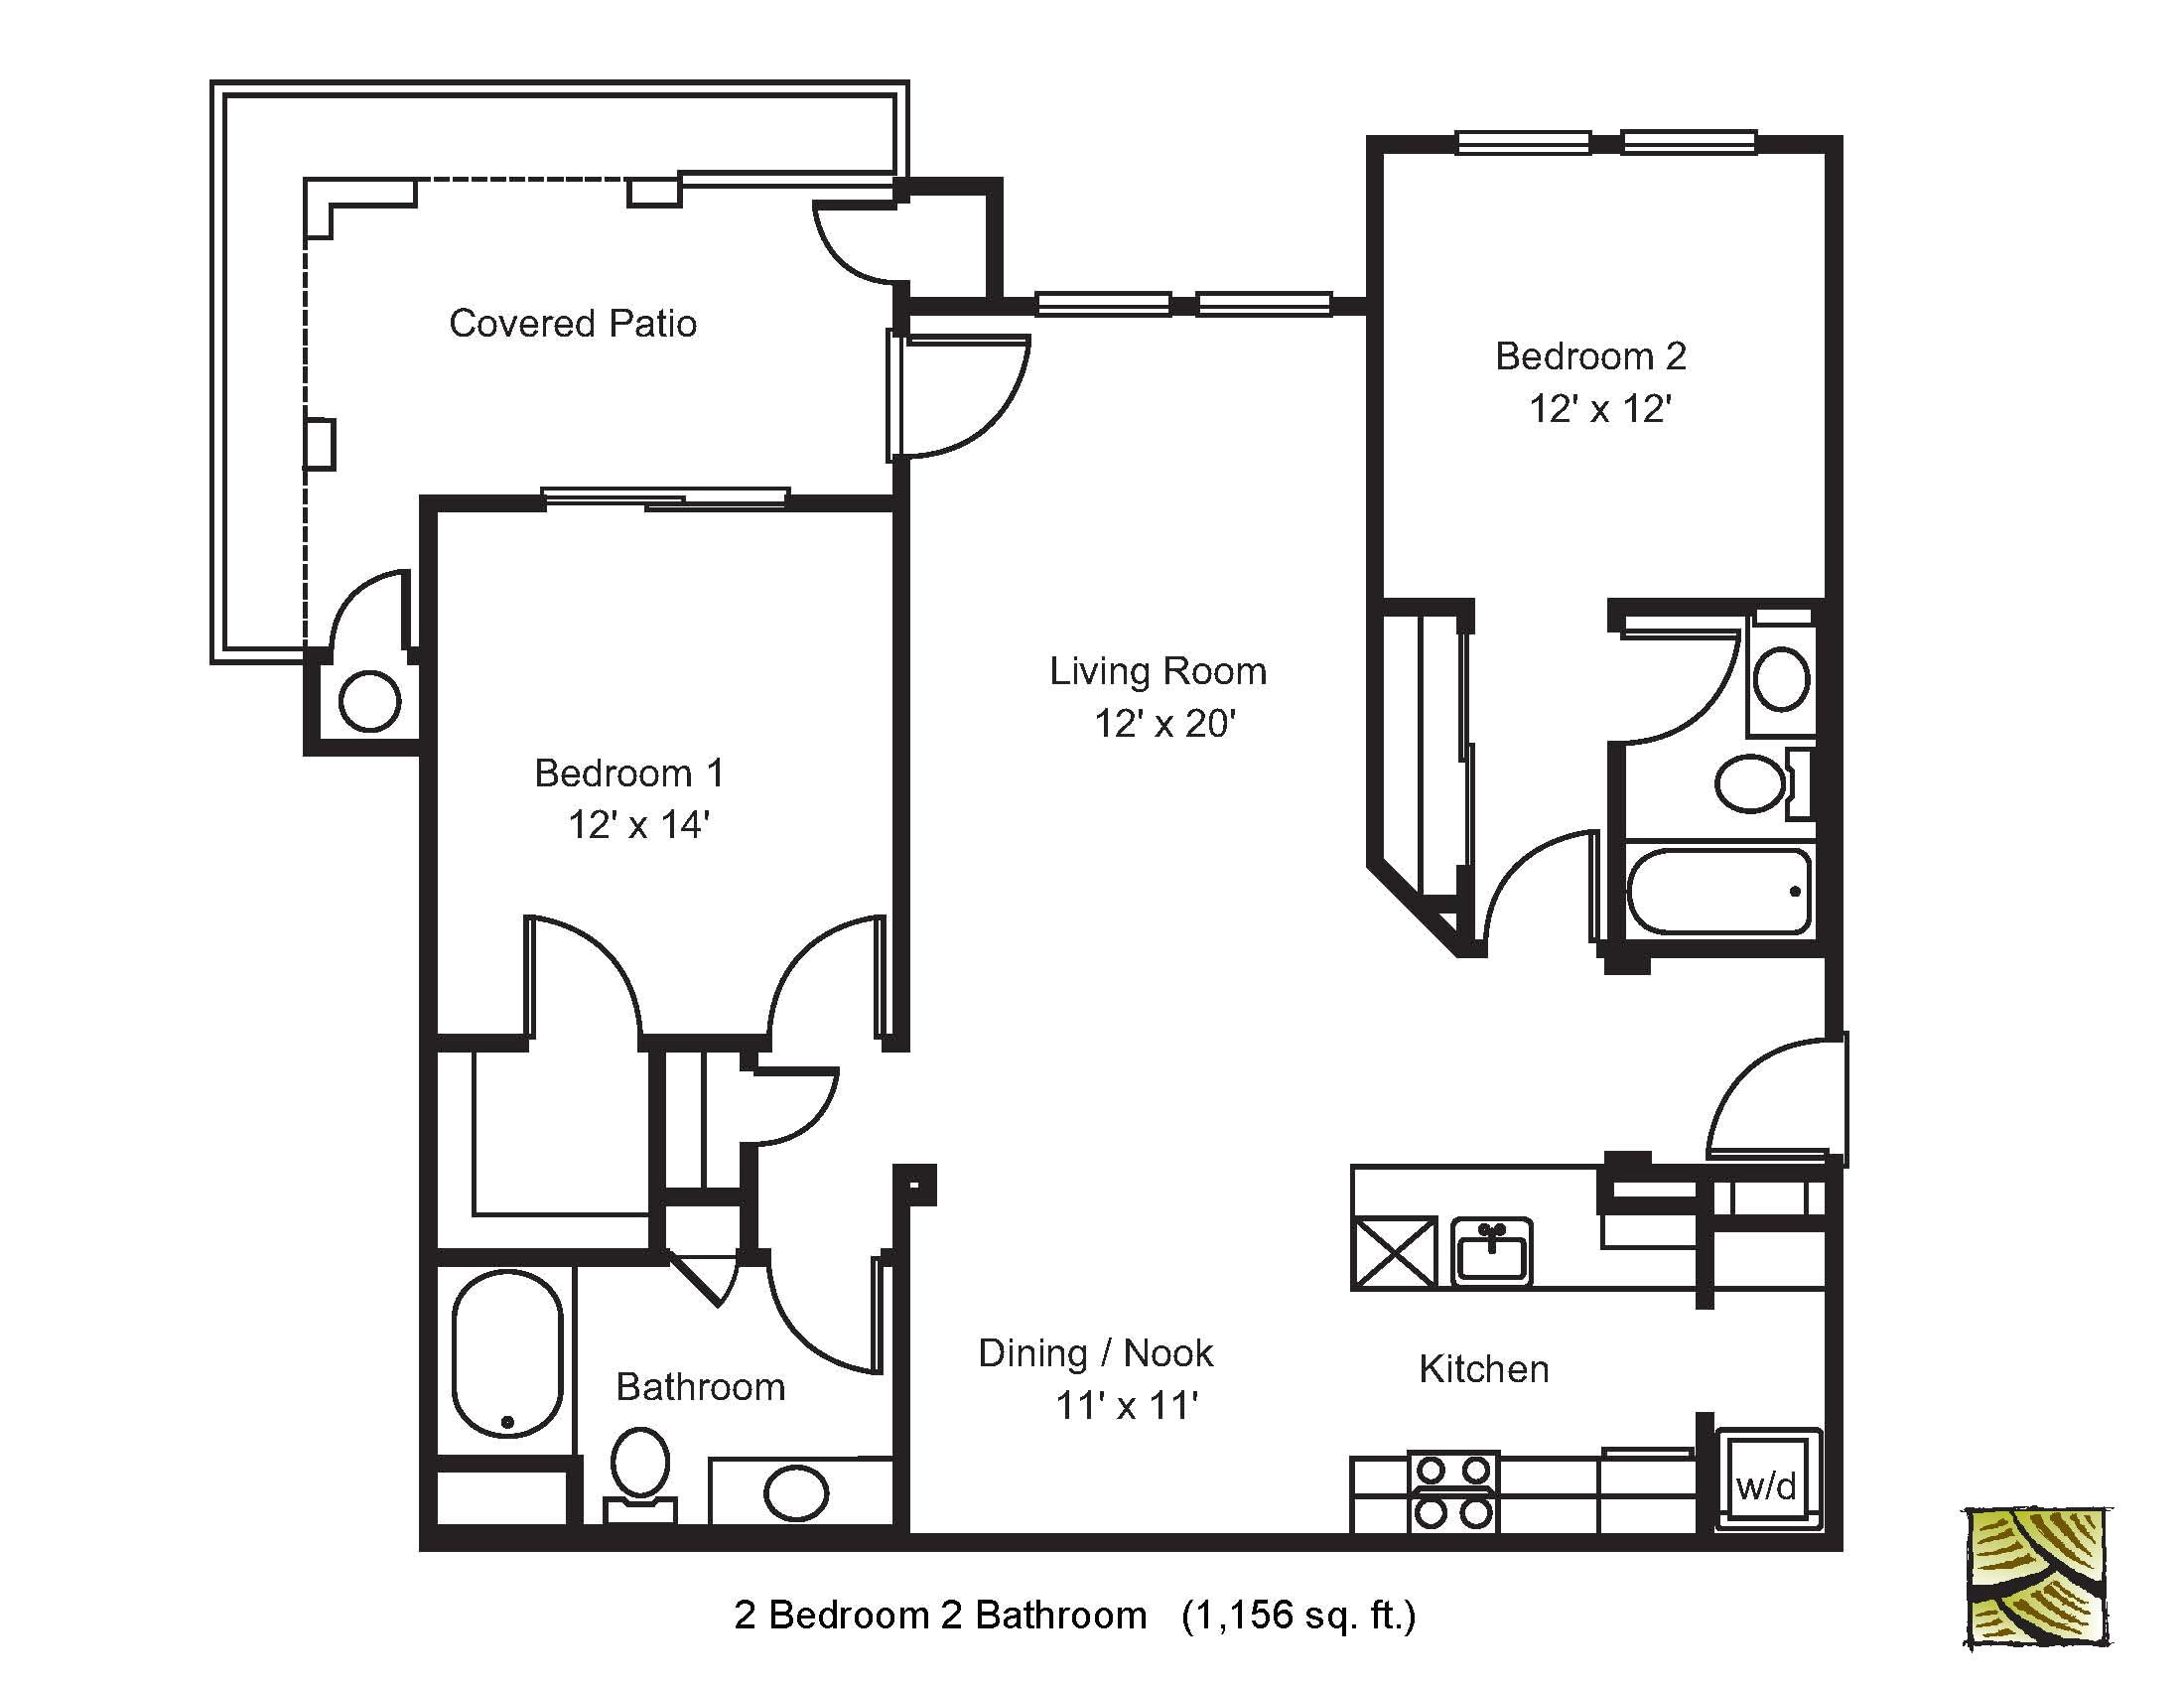 online floor plan maker of tritmonk pictures of home interior flooring design idea freeware layout floorplans simple photos search